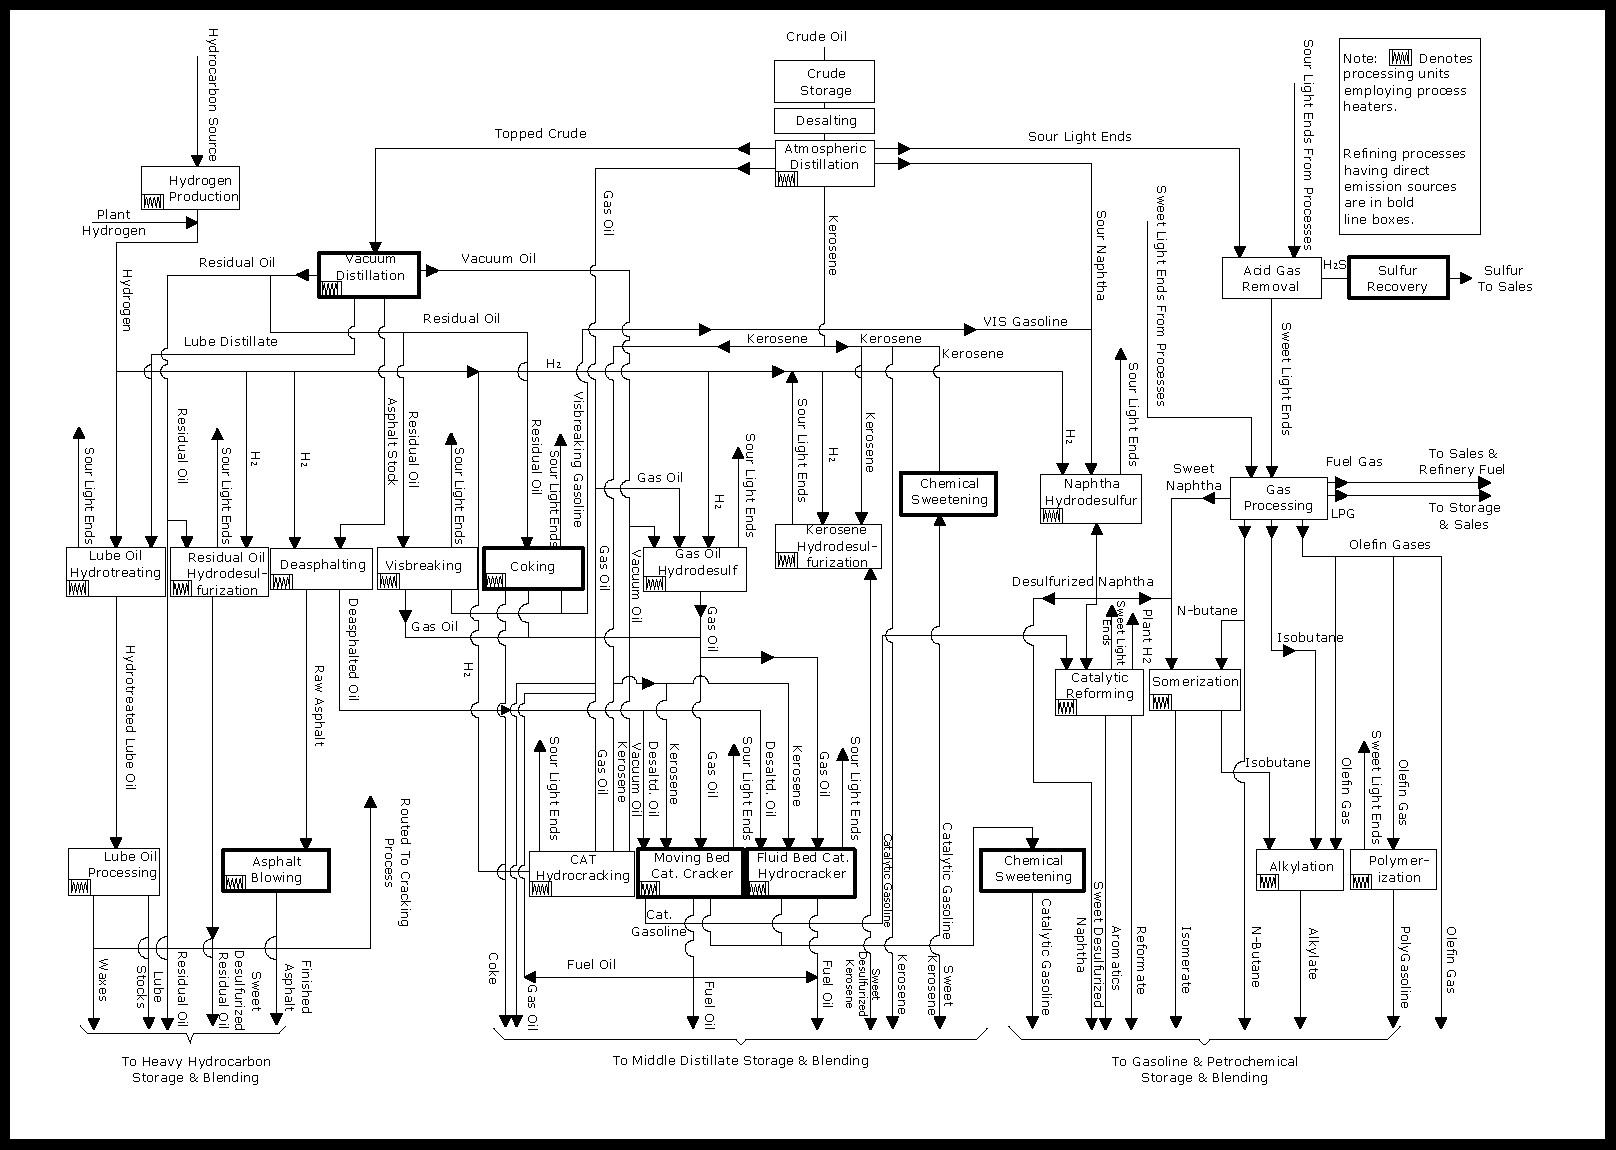 Crude Oil Refining Process Flow Diagram